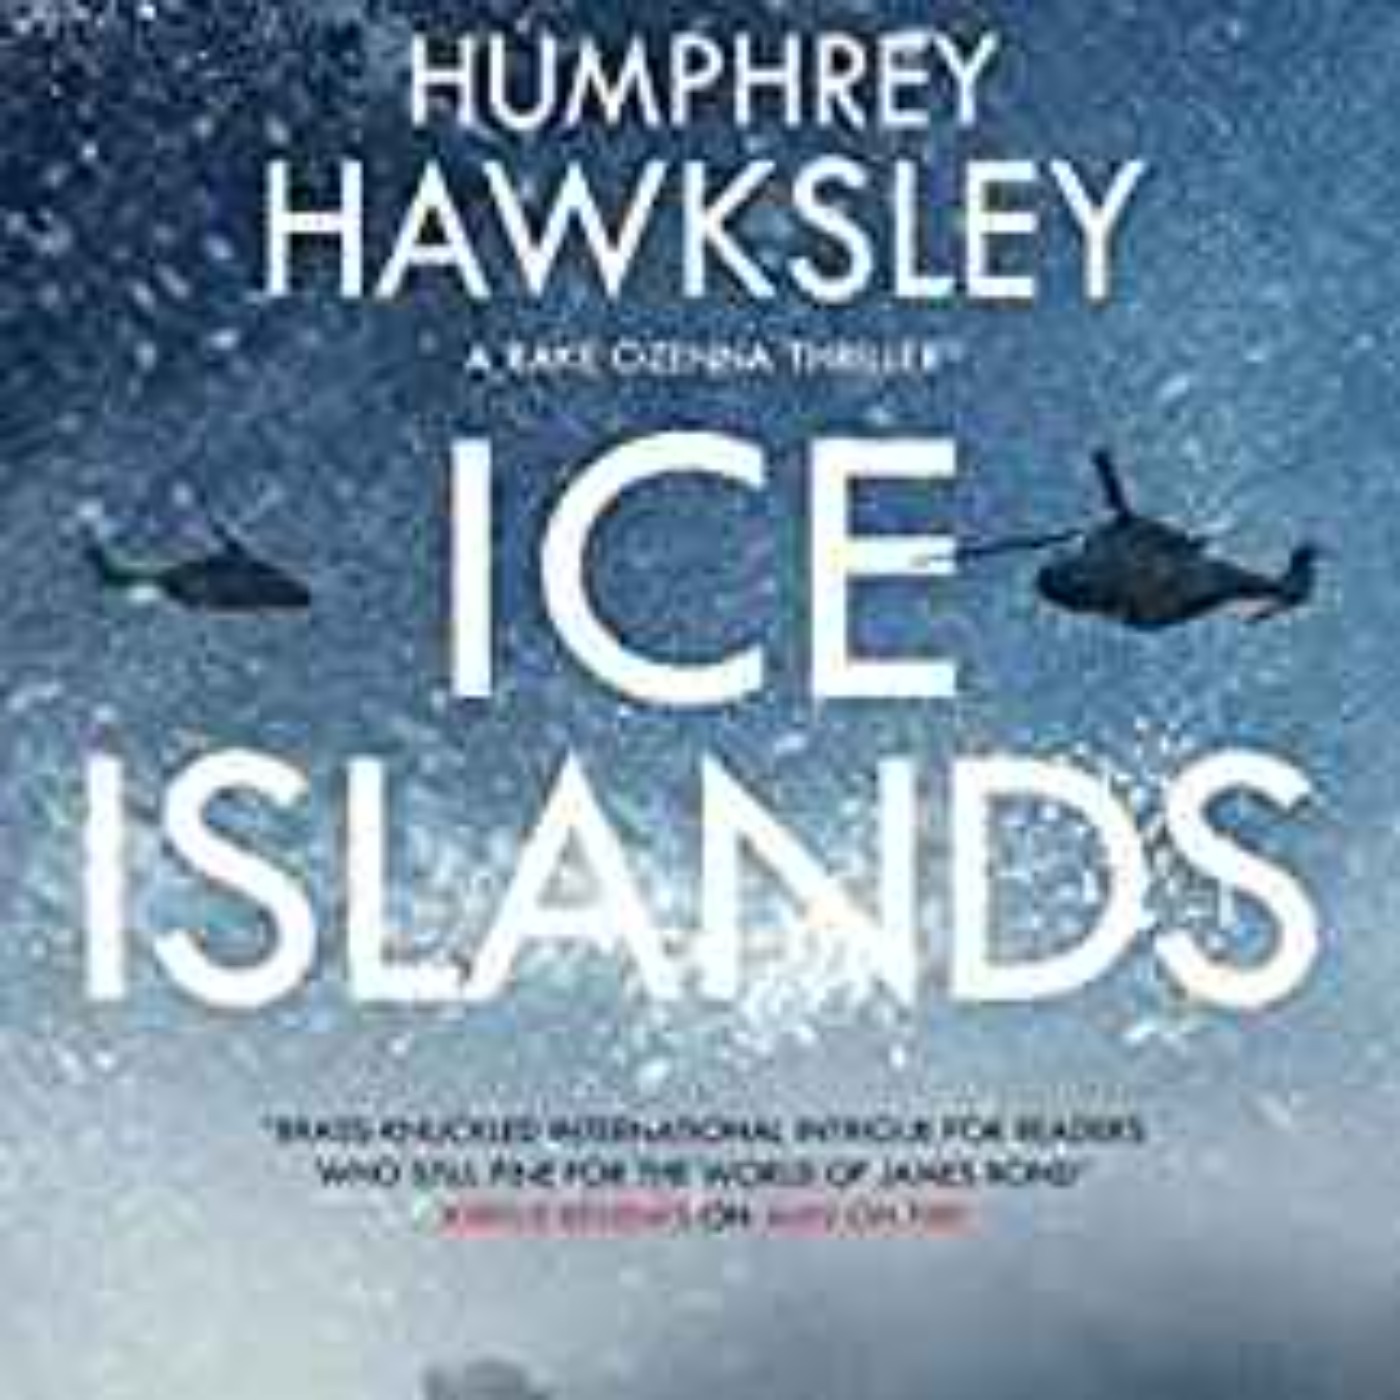 cover art for Humphrey Hawksley - Ice Islands